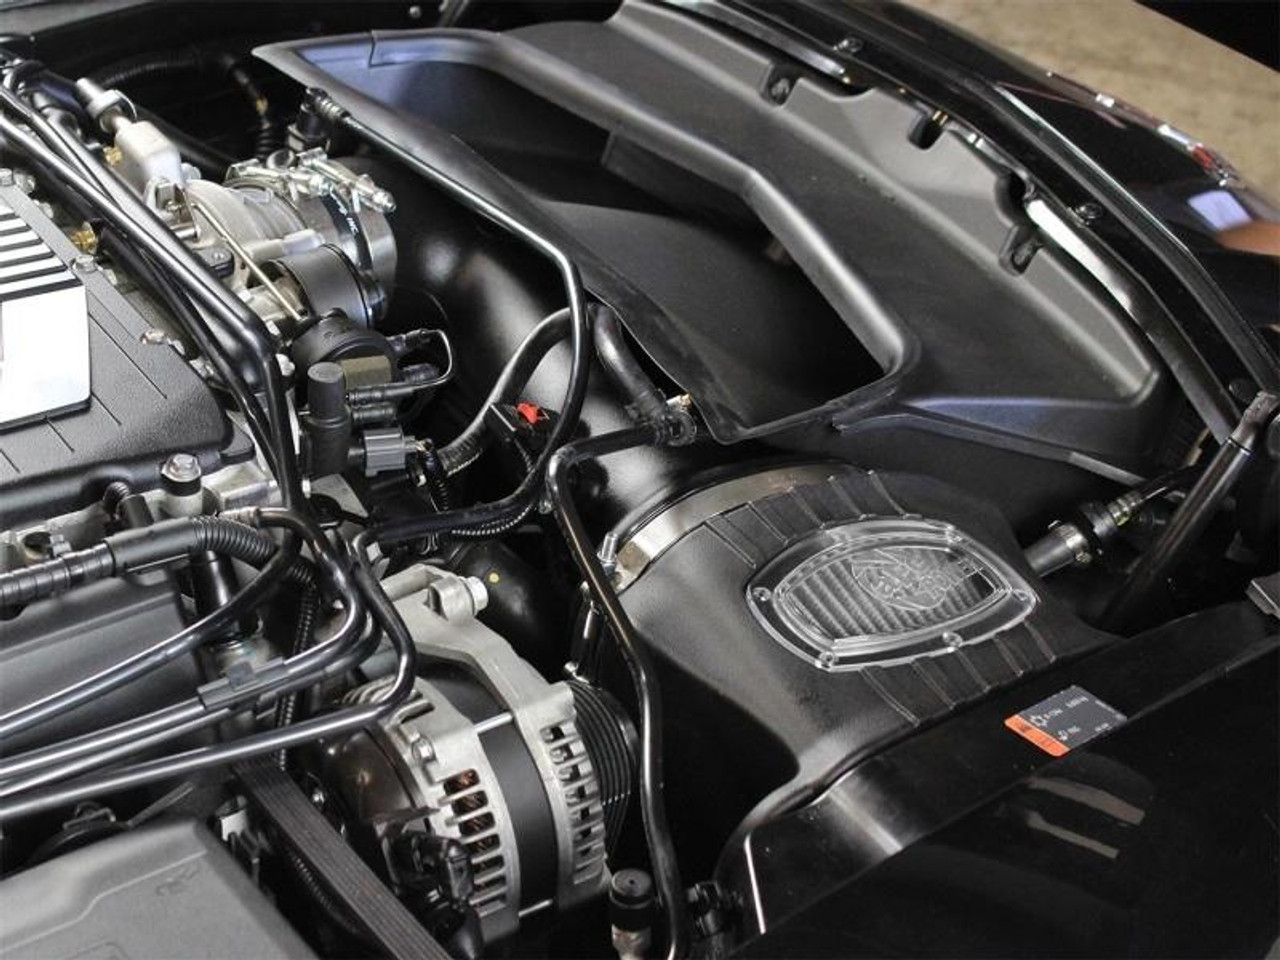 AFE aFe Momentum Pro DRY S Cold Air Intake System 15-17 Chevy Corvette Z06 C7 V8-6.2L sc - 51-74202-1